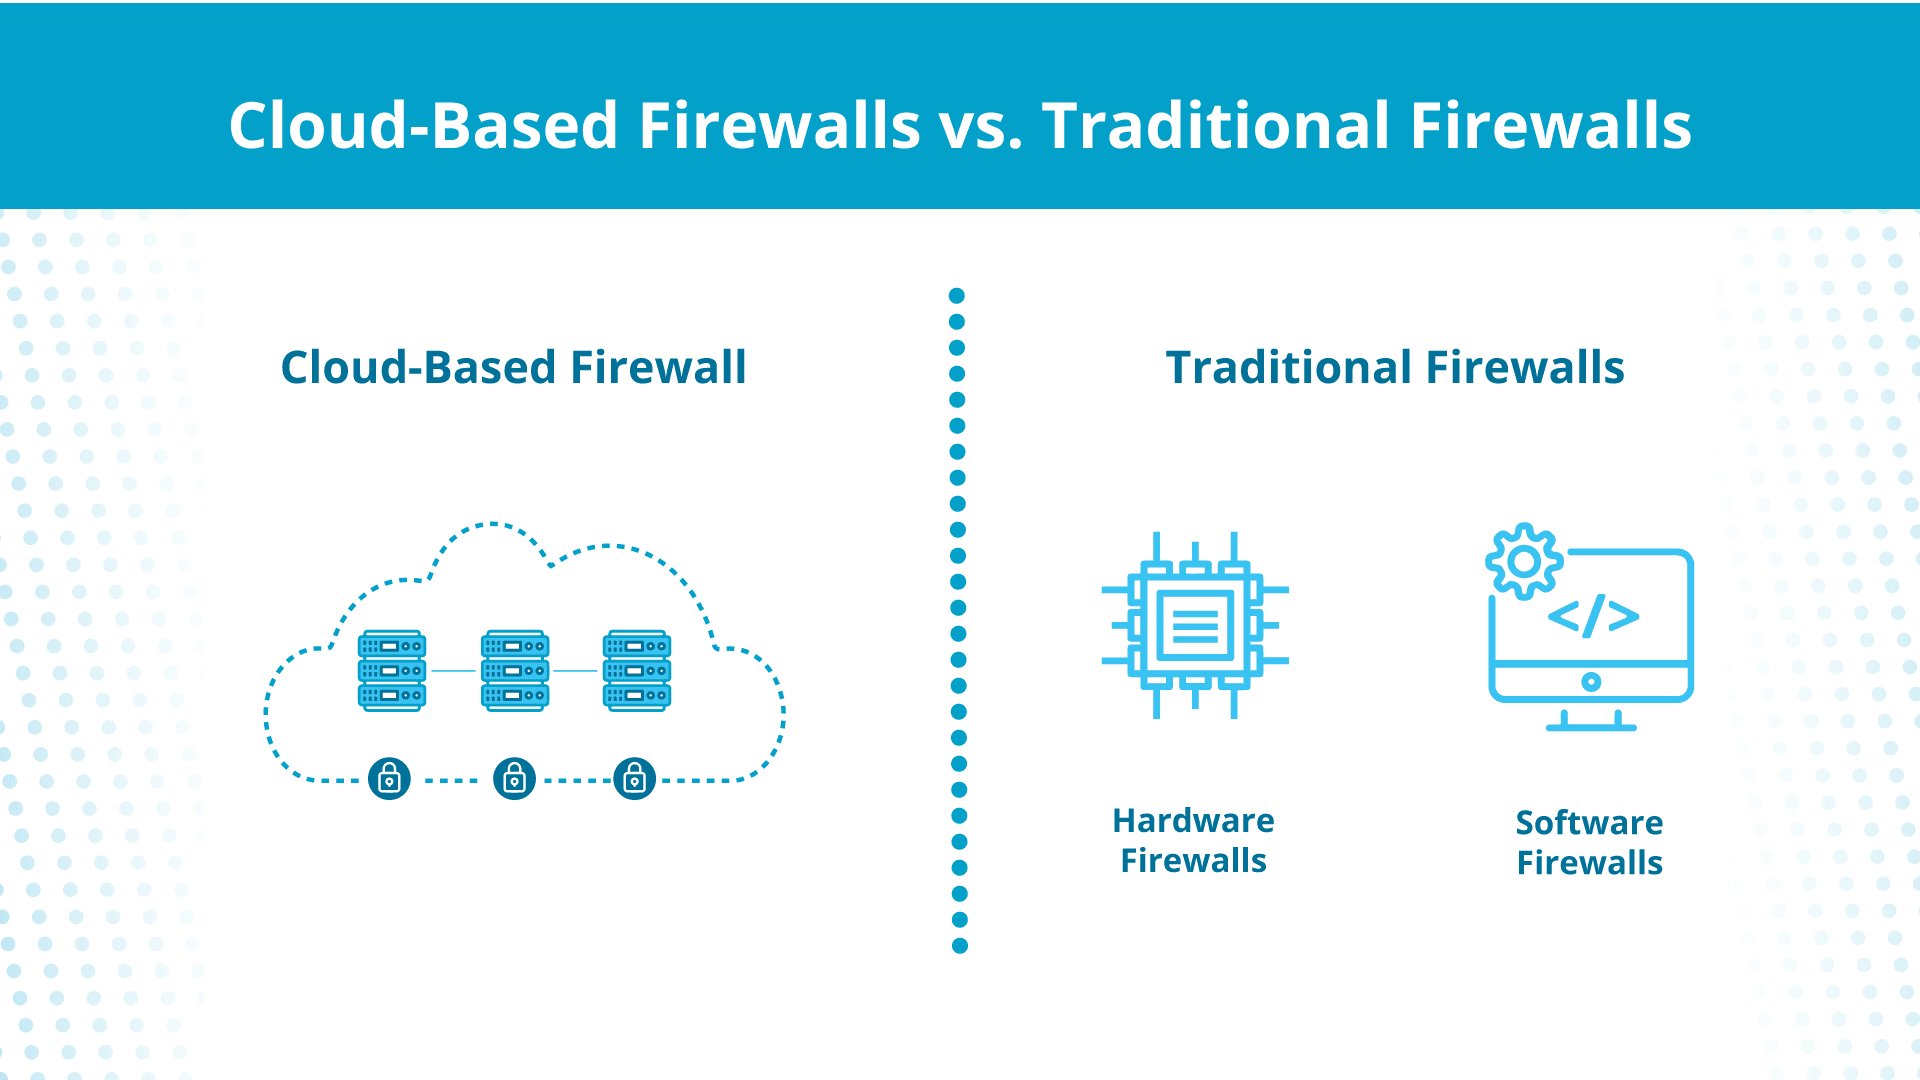 Cloud-based firewalls vs traditional firewalls.